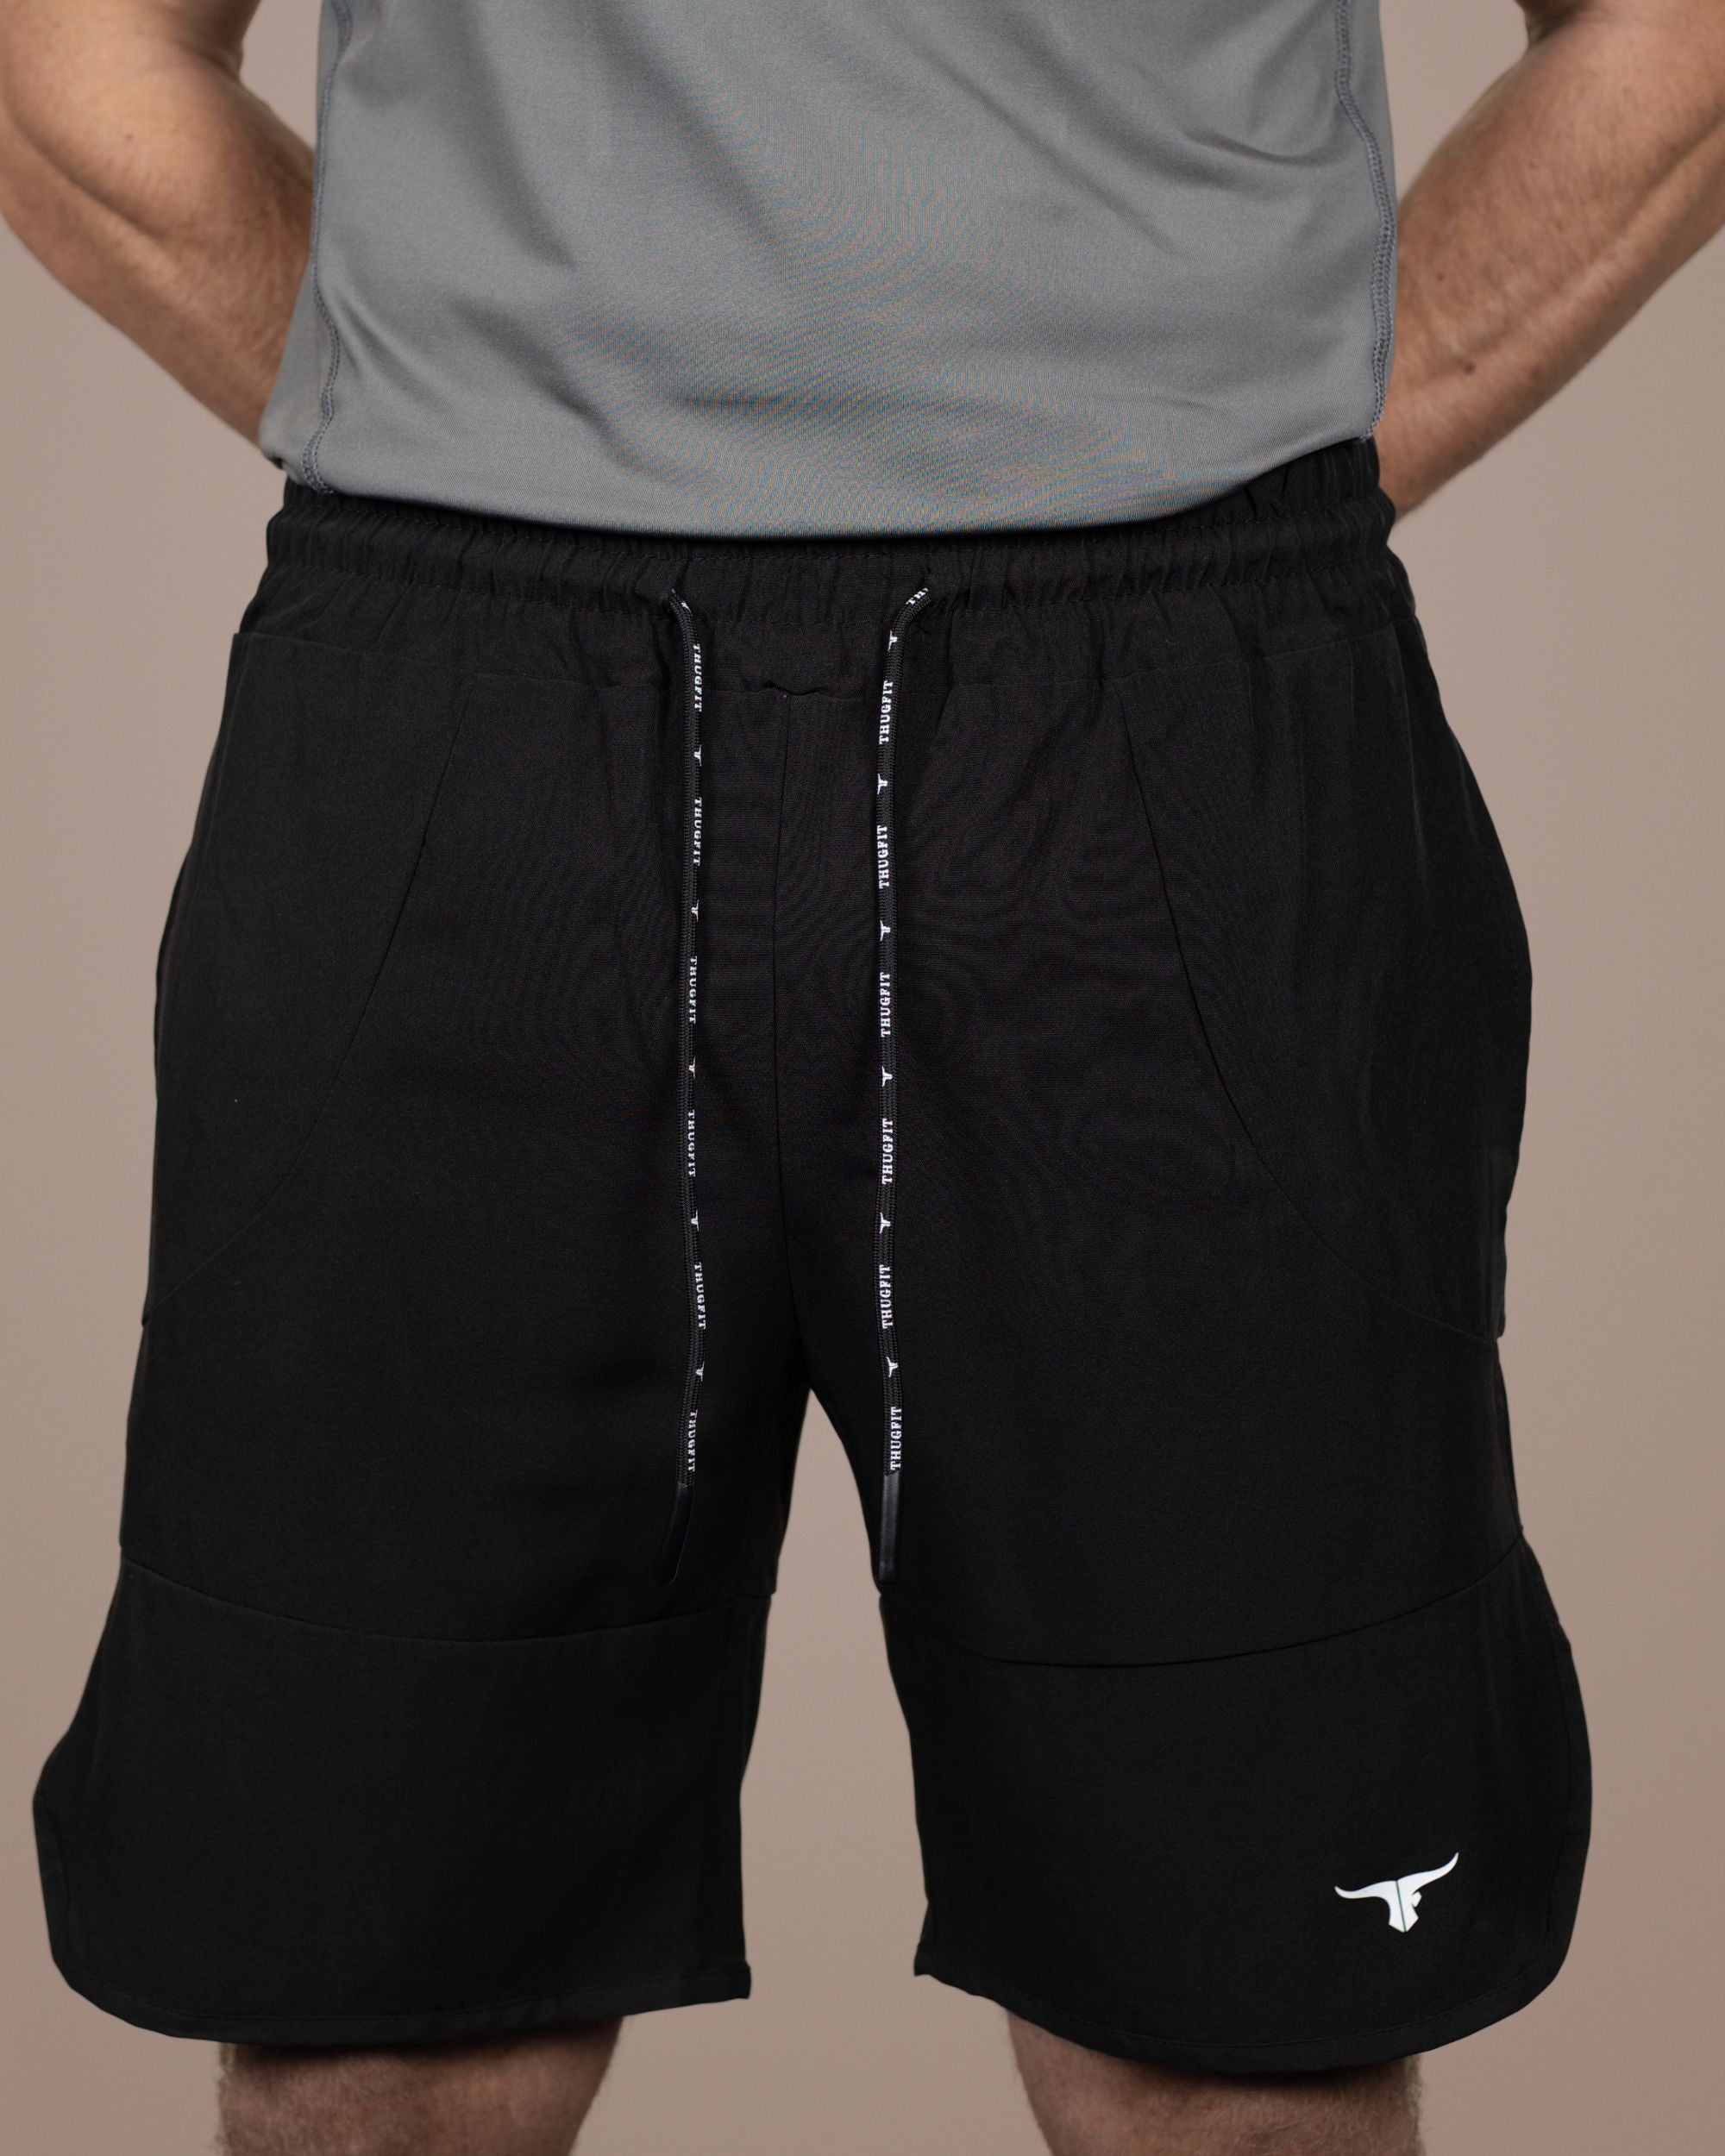 THUGFIT BlackHawk High-performance Men's Shorts (9" Inseam) - Black - THUGFIT